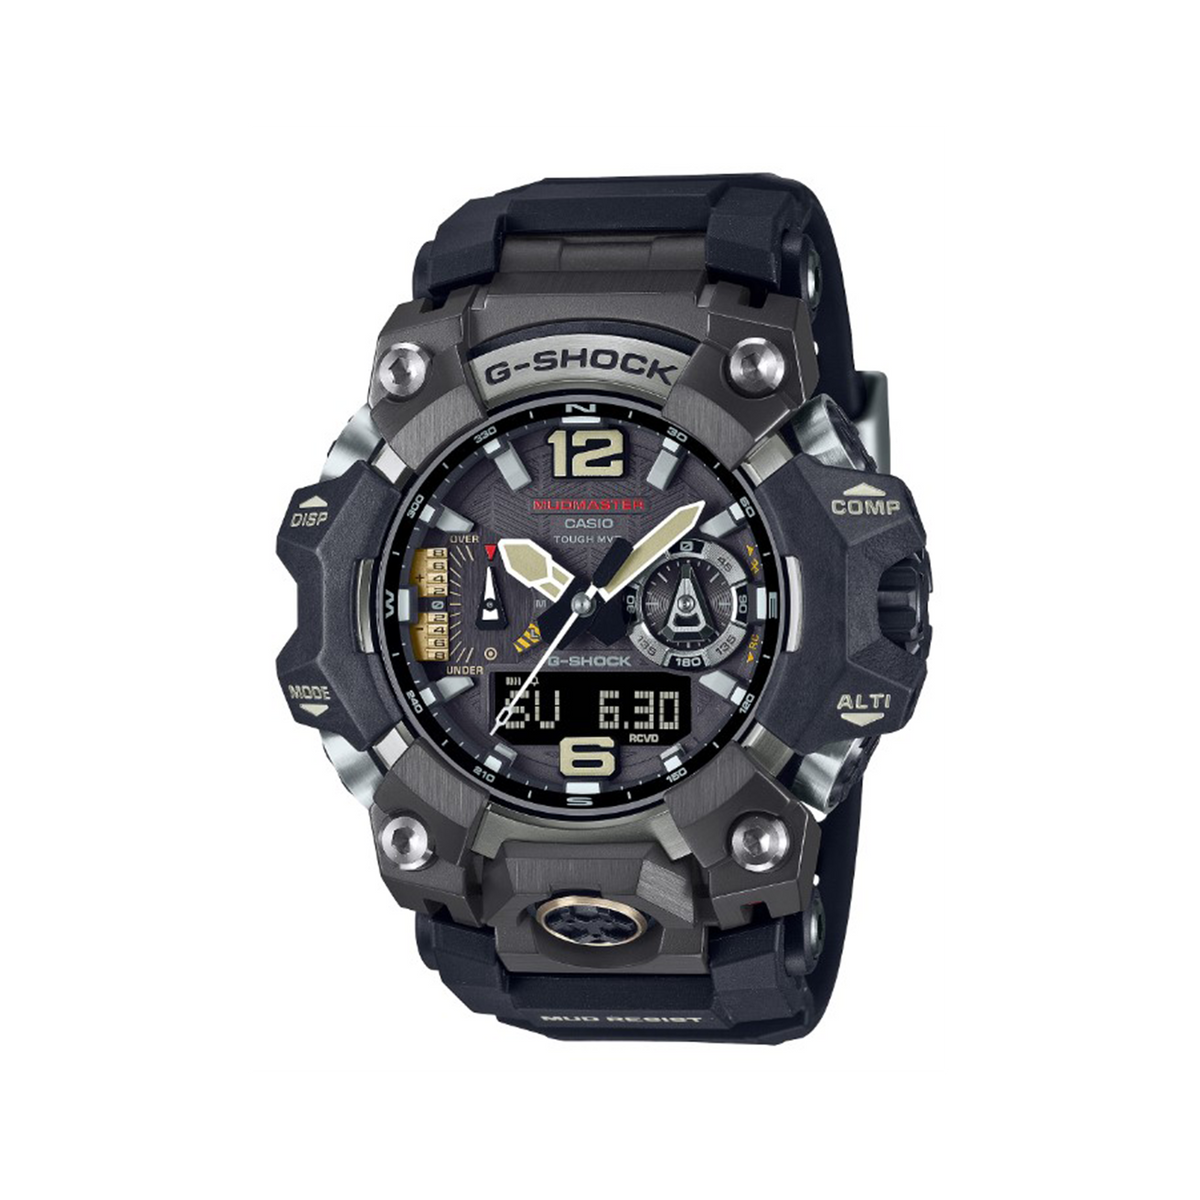 Casio G-Shock Mudmaster Men’s 52mm Solar Watch GWGB1000-1A